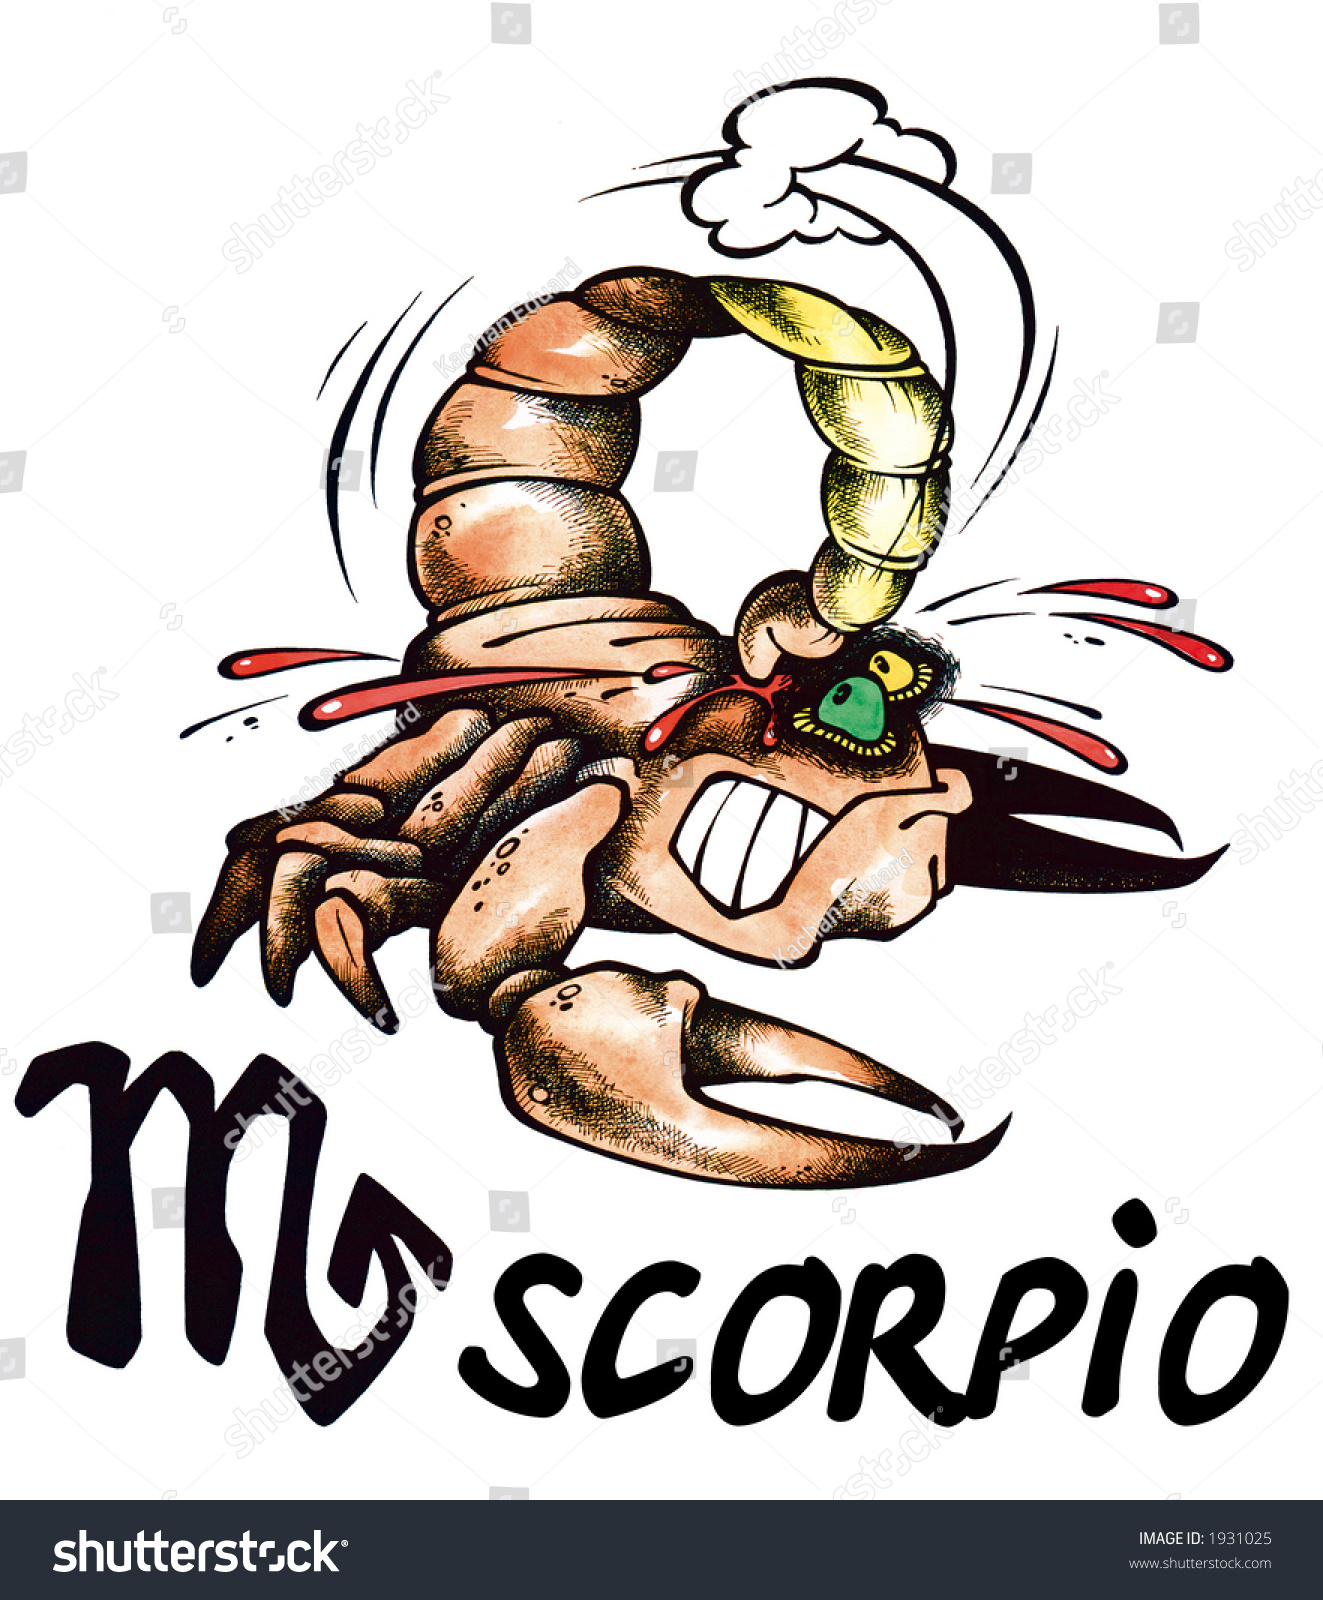 Cartoon Illustration Of Scorpio On White Background - 1931025